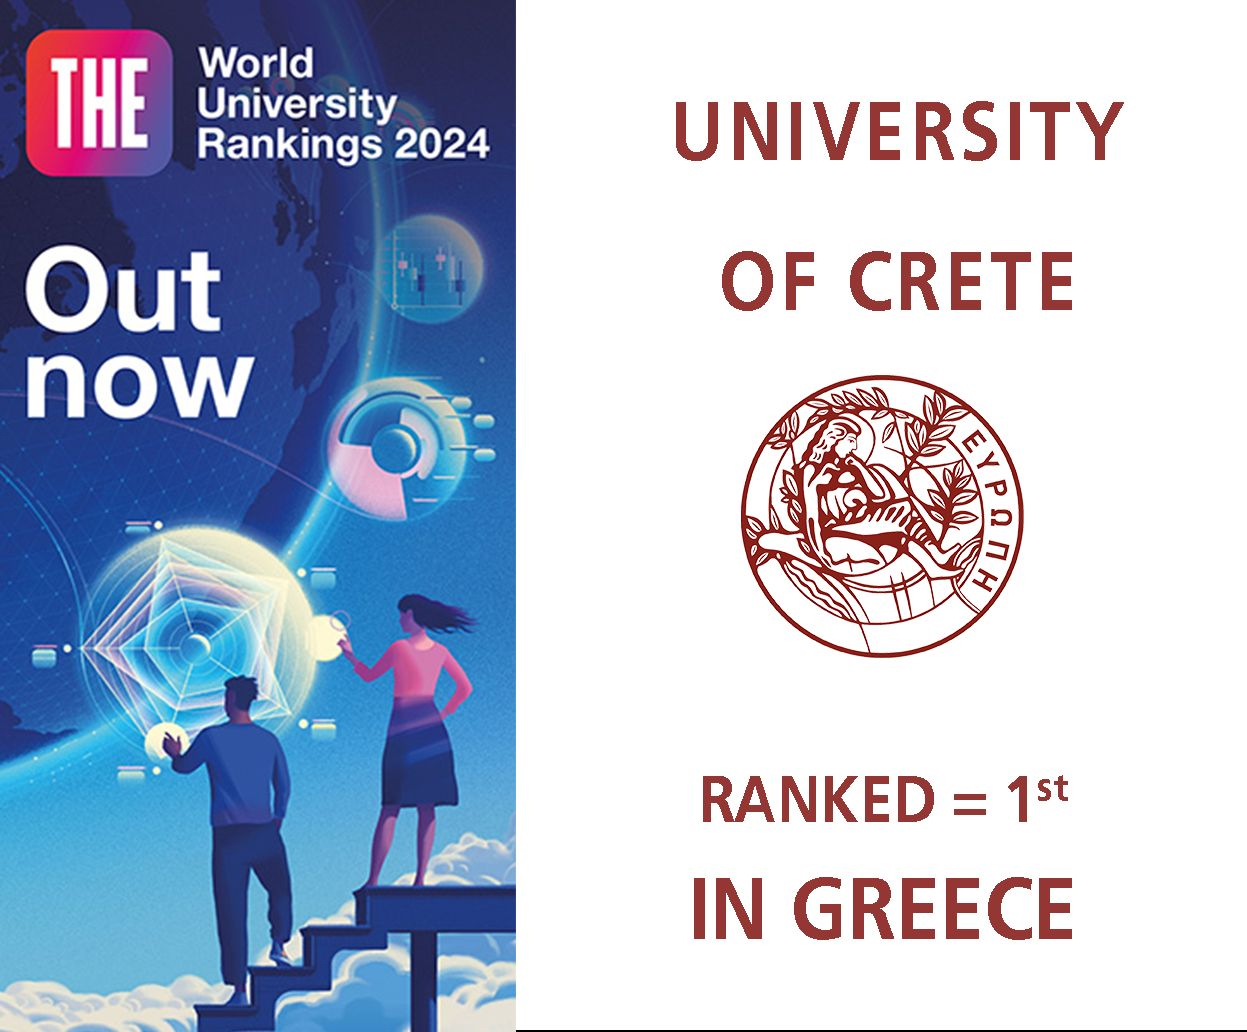 University of Crete is ranked 1st among Greek universities